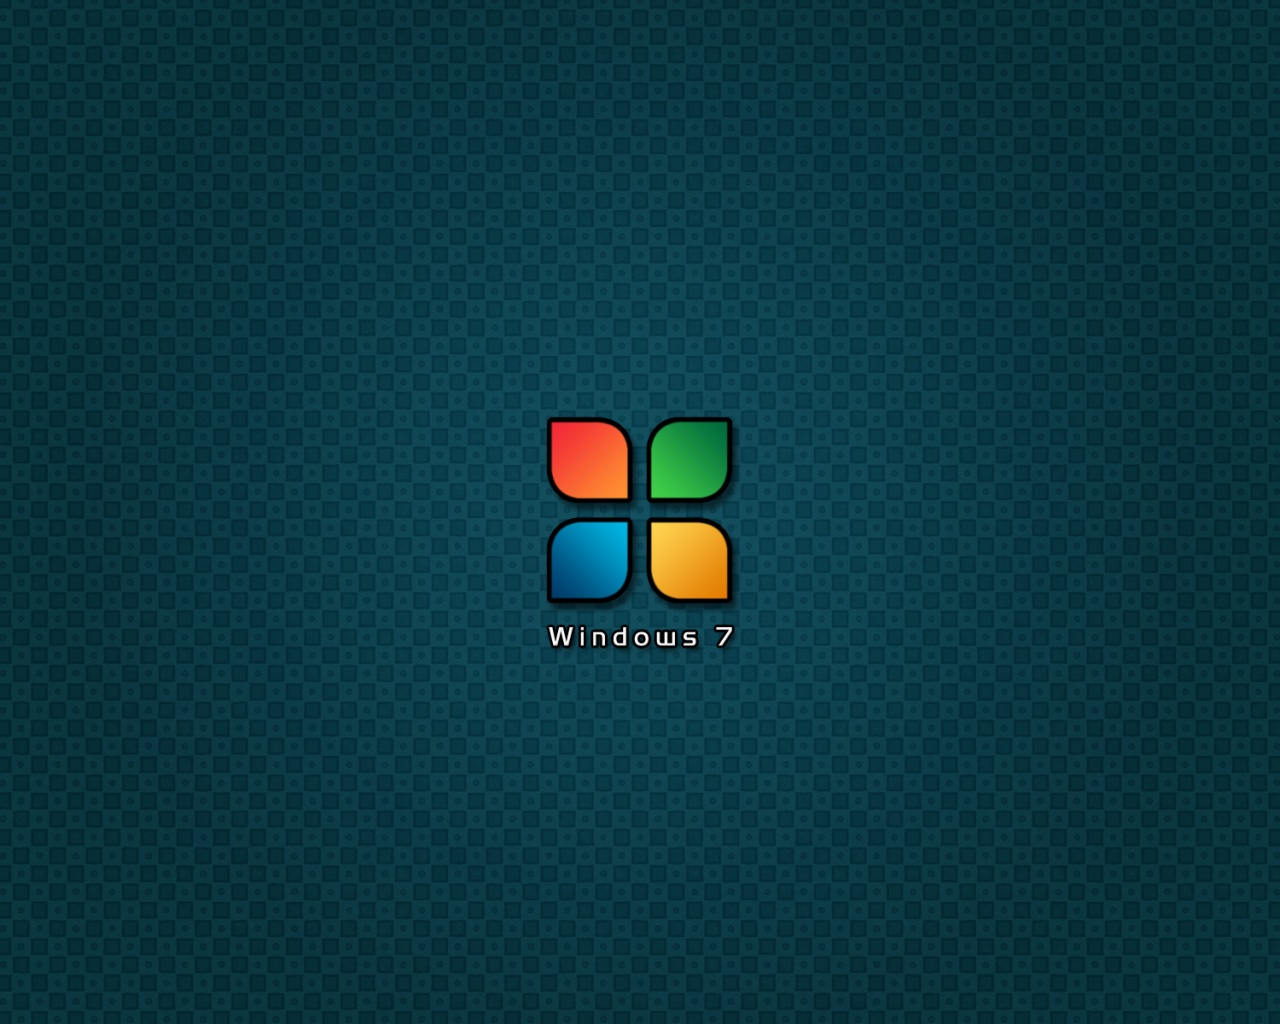 Logo Windows Desktop Pc And Mac Wallpaper